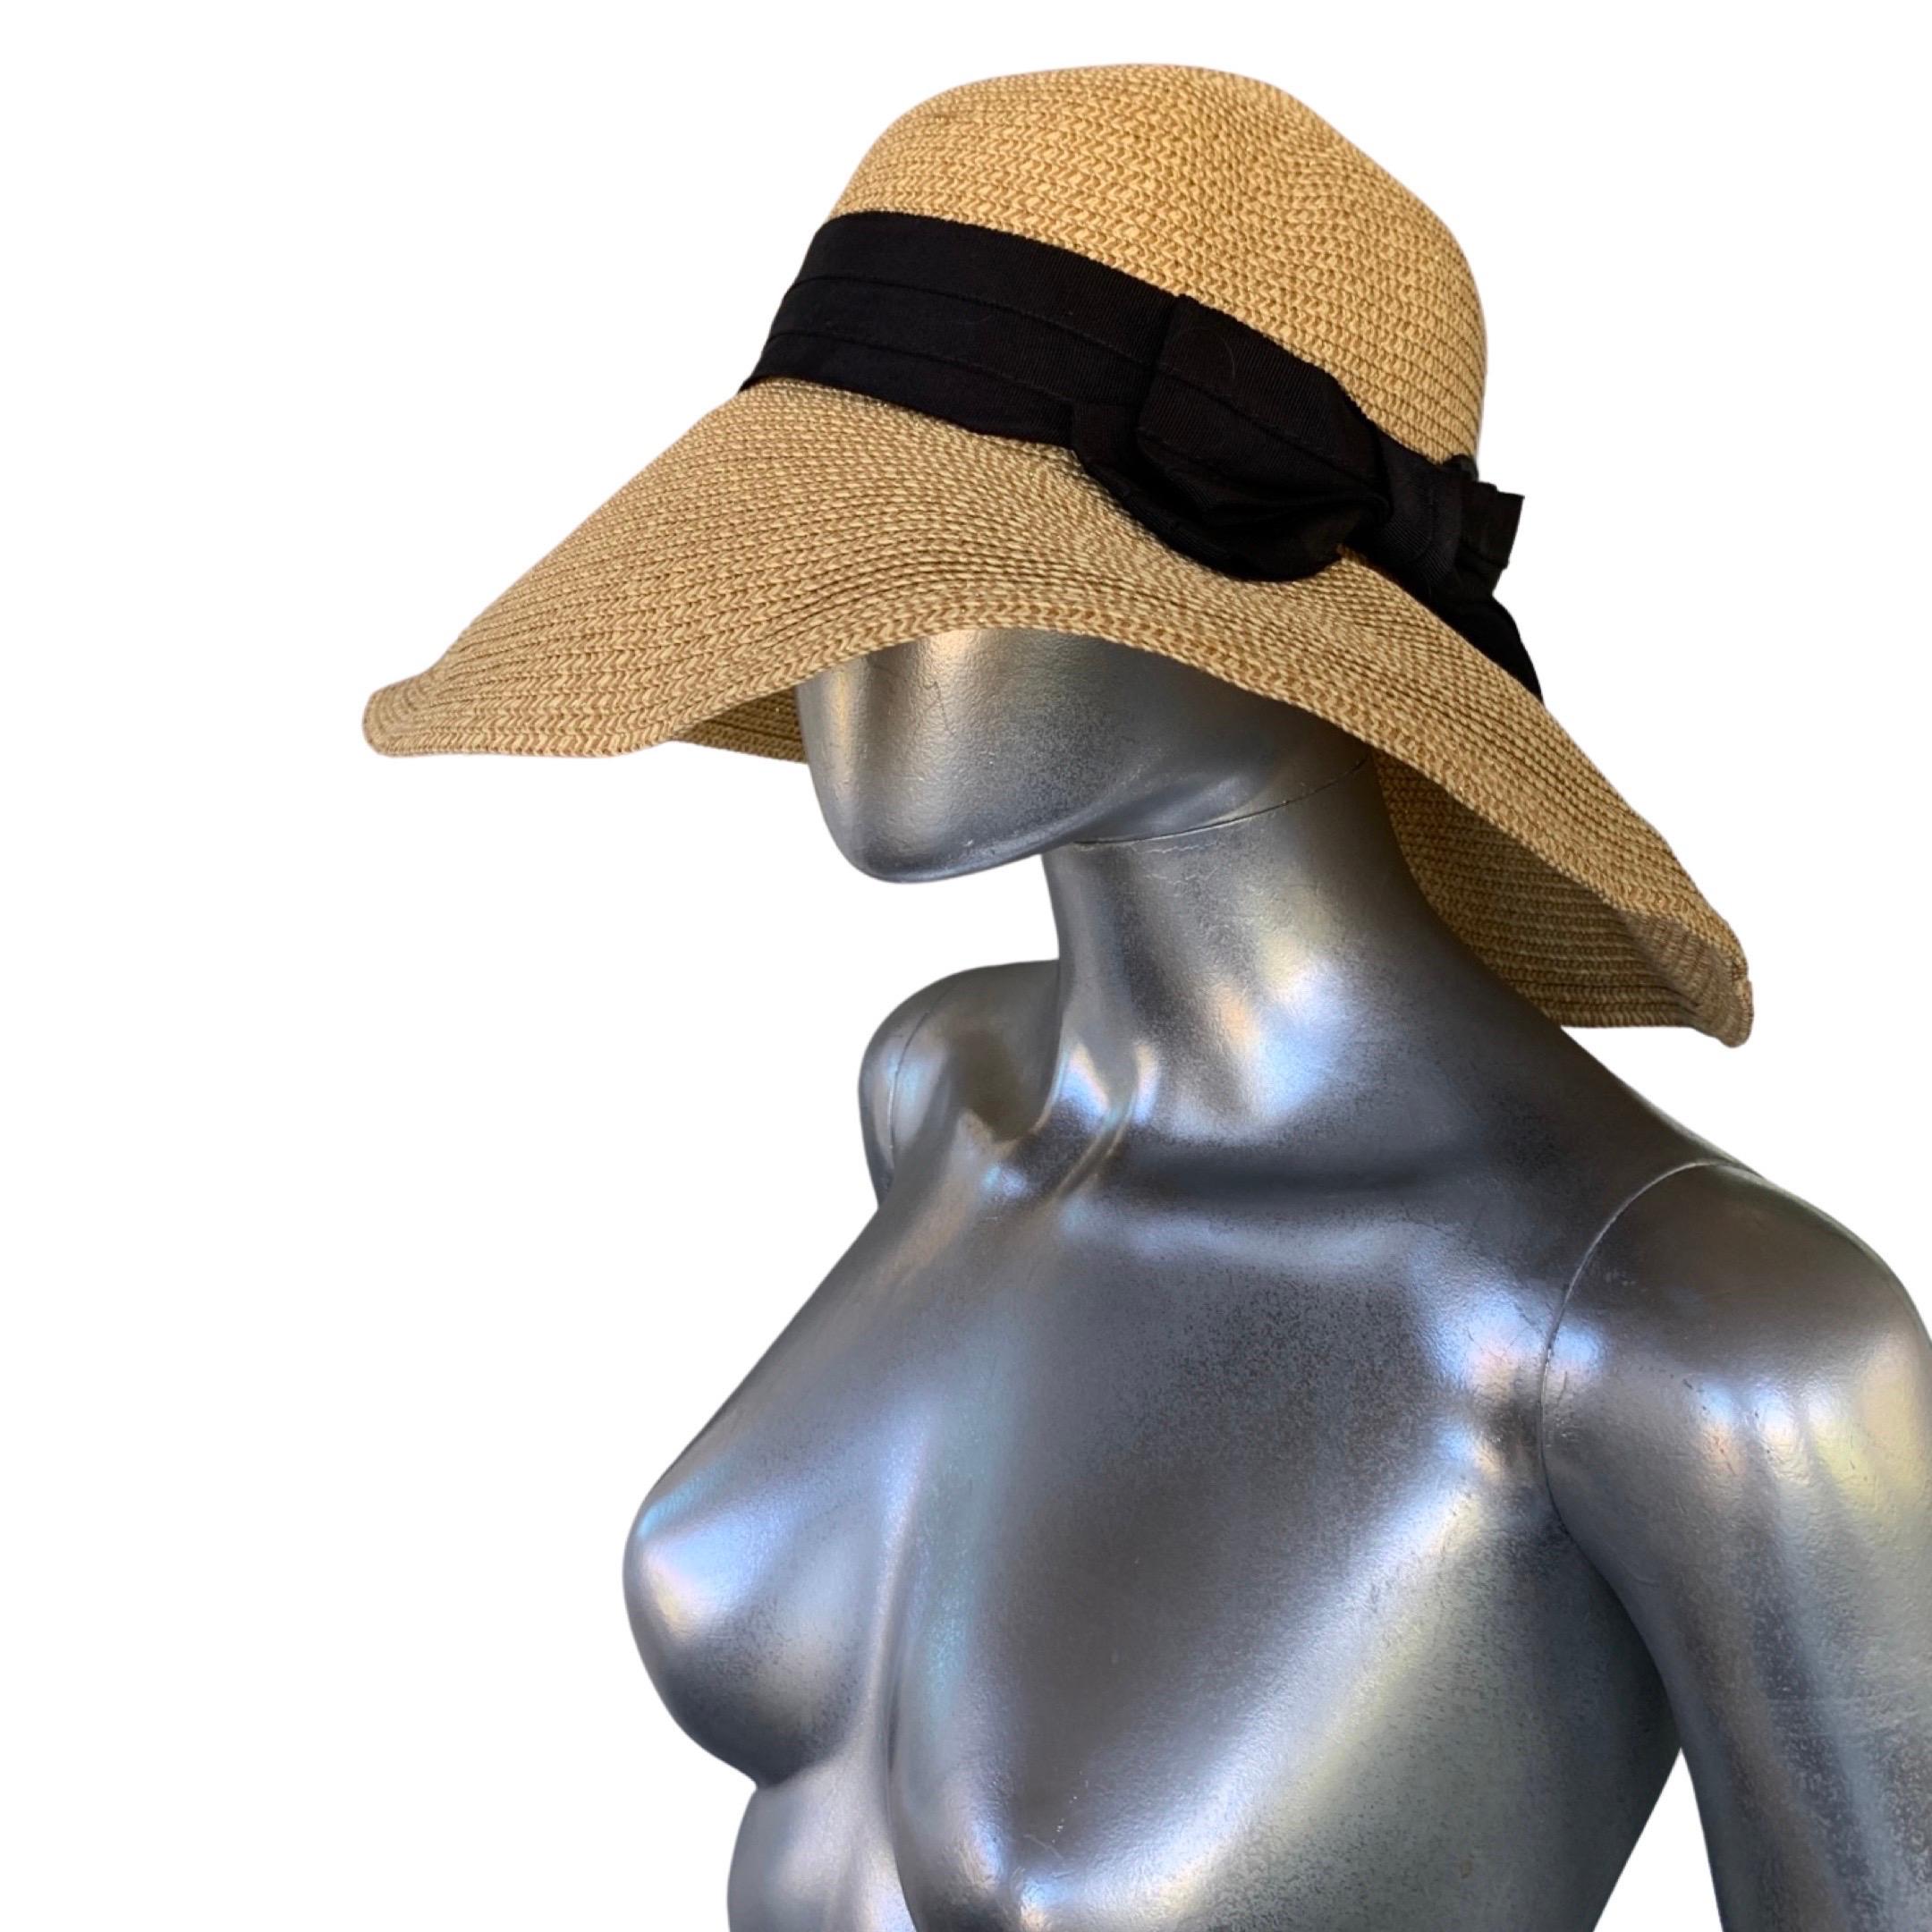 Women's Gottex Fashion Straw Color Hat with Chic Black Bow Flexible Brim 